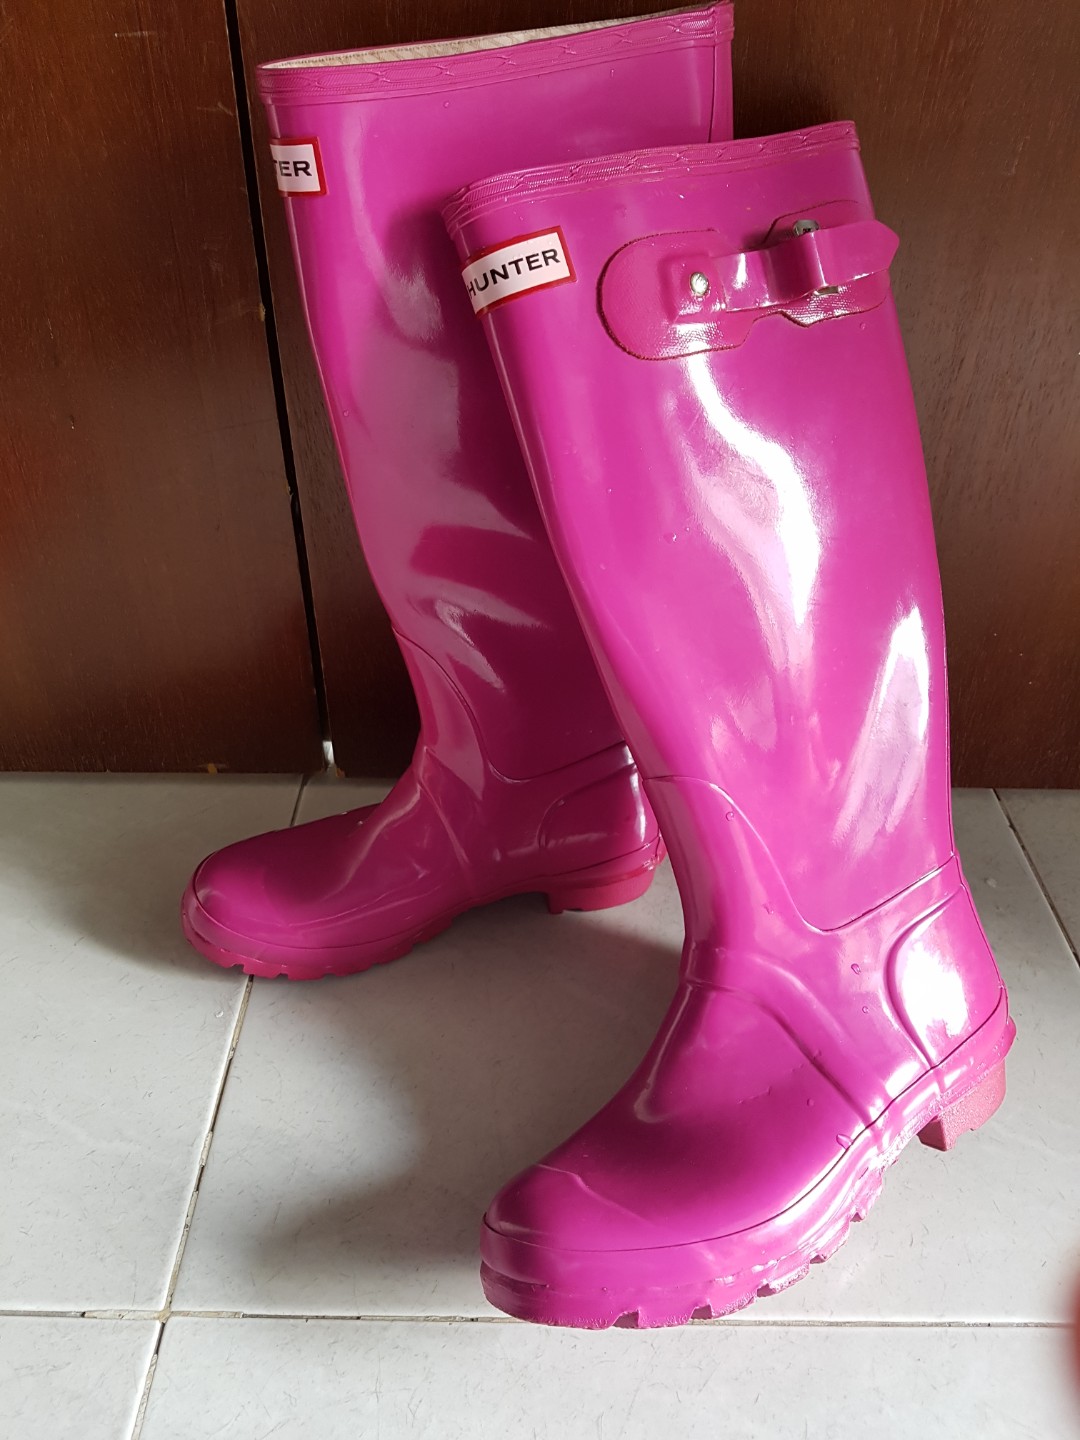 FAST DEAL $50** HUNTER Pink Rain Boots 